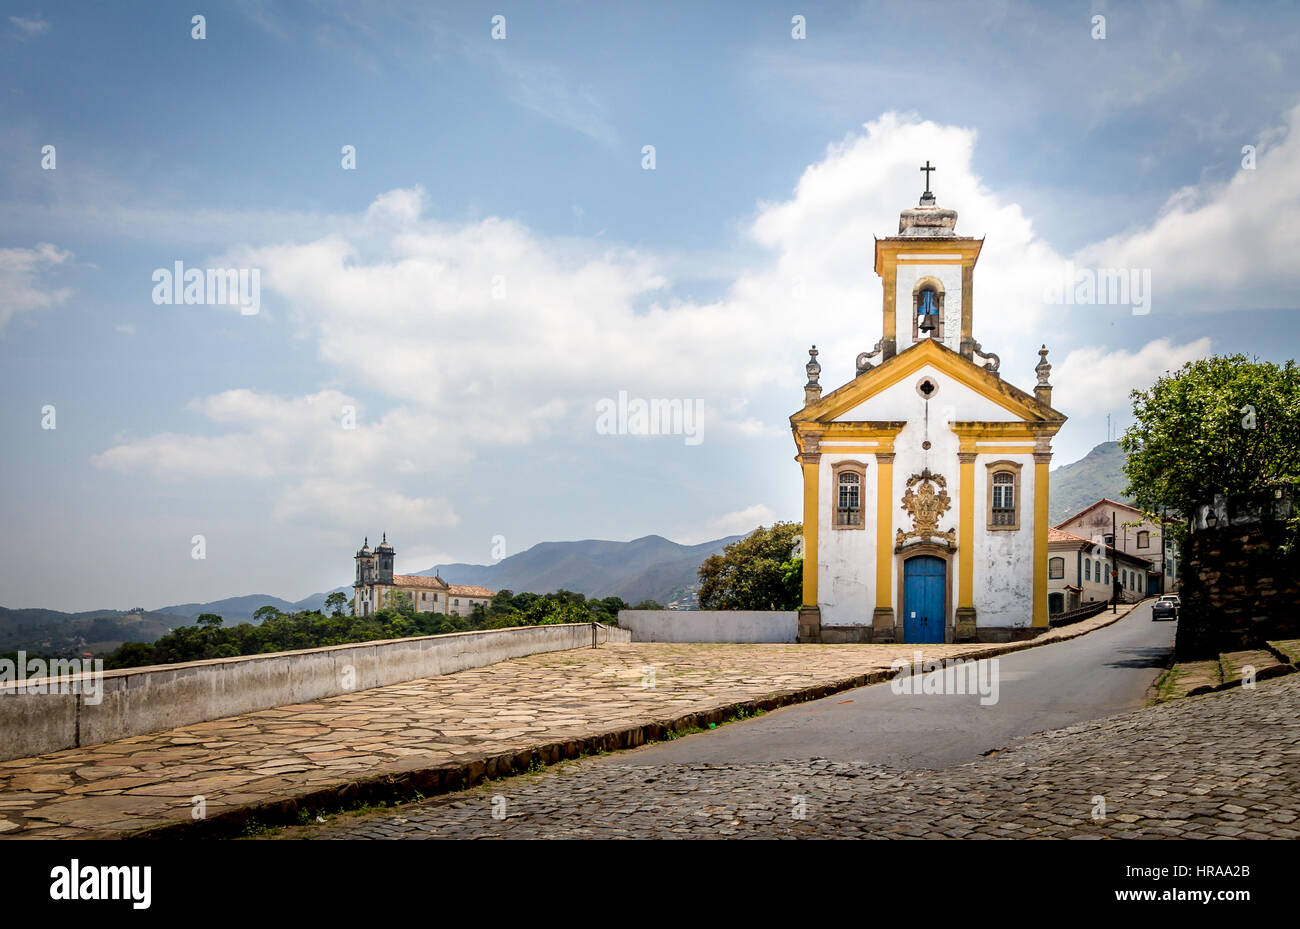 Church in Ouro Preto - Minas Gerais, Brazil Stock Photo